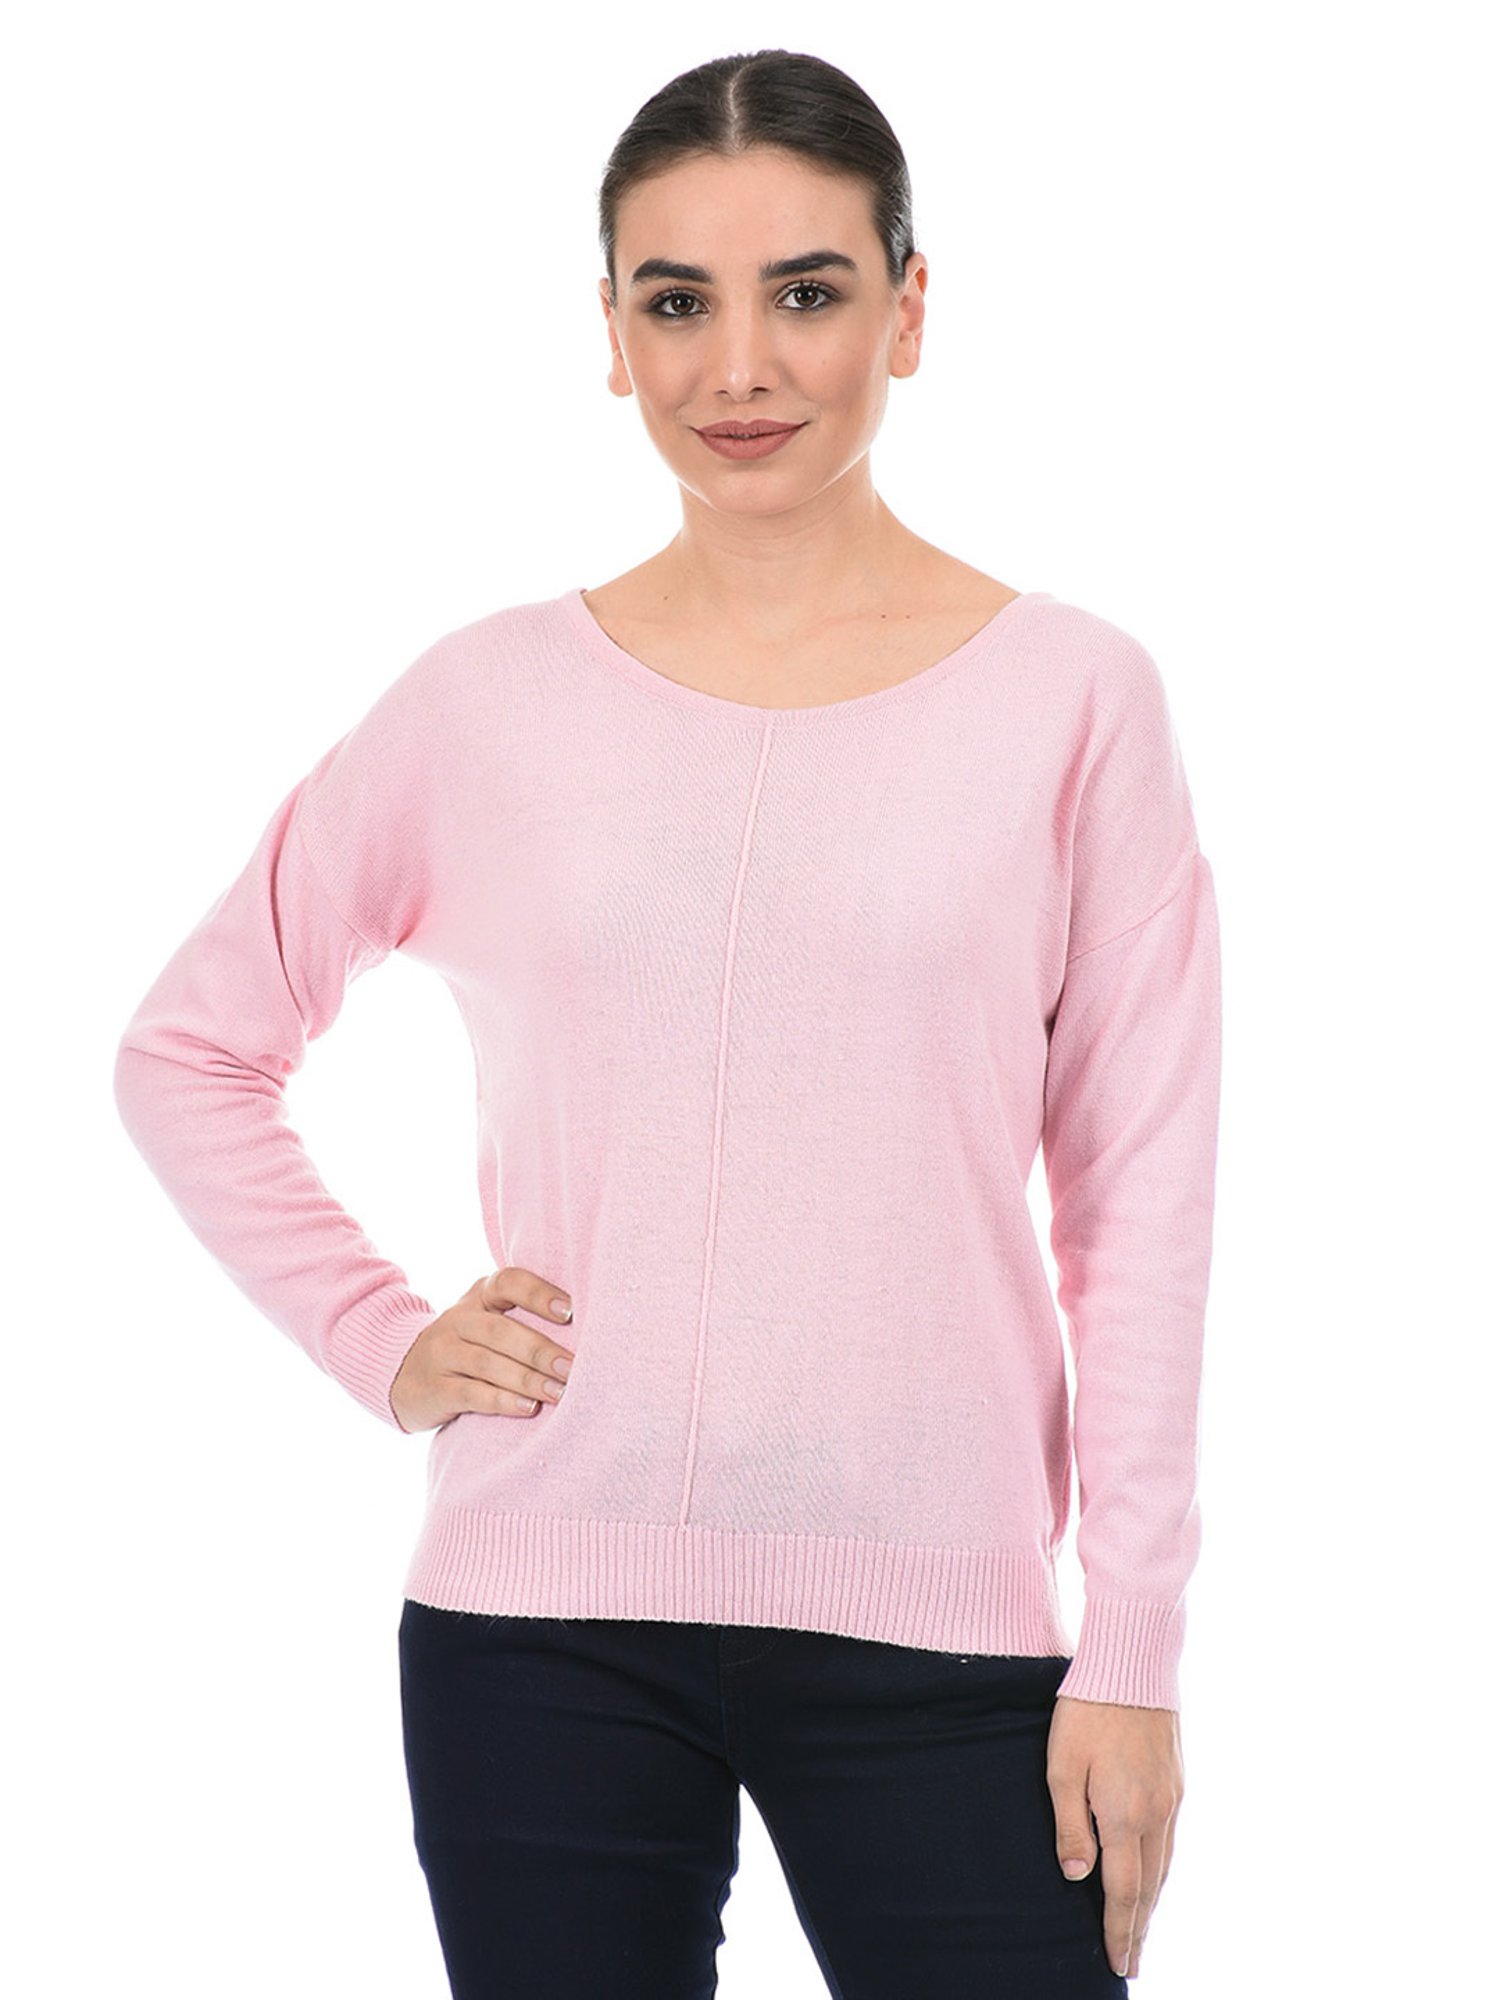 People by Pantaloons Pink Self Pattern Sweater